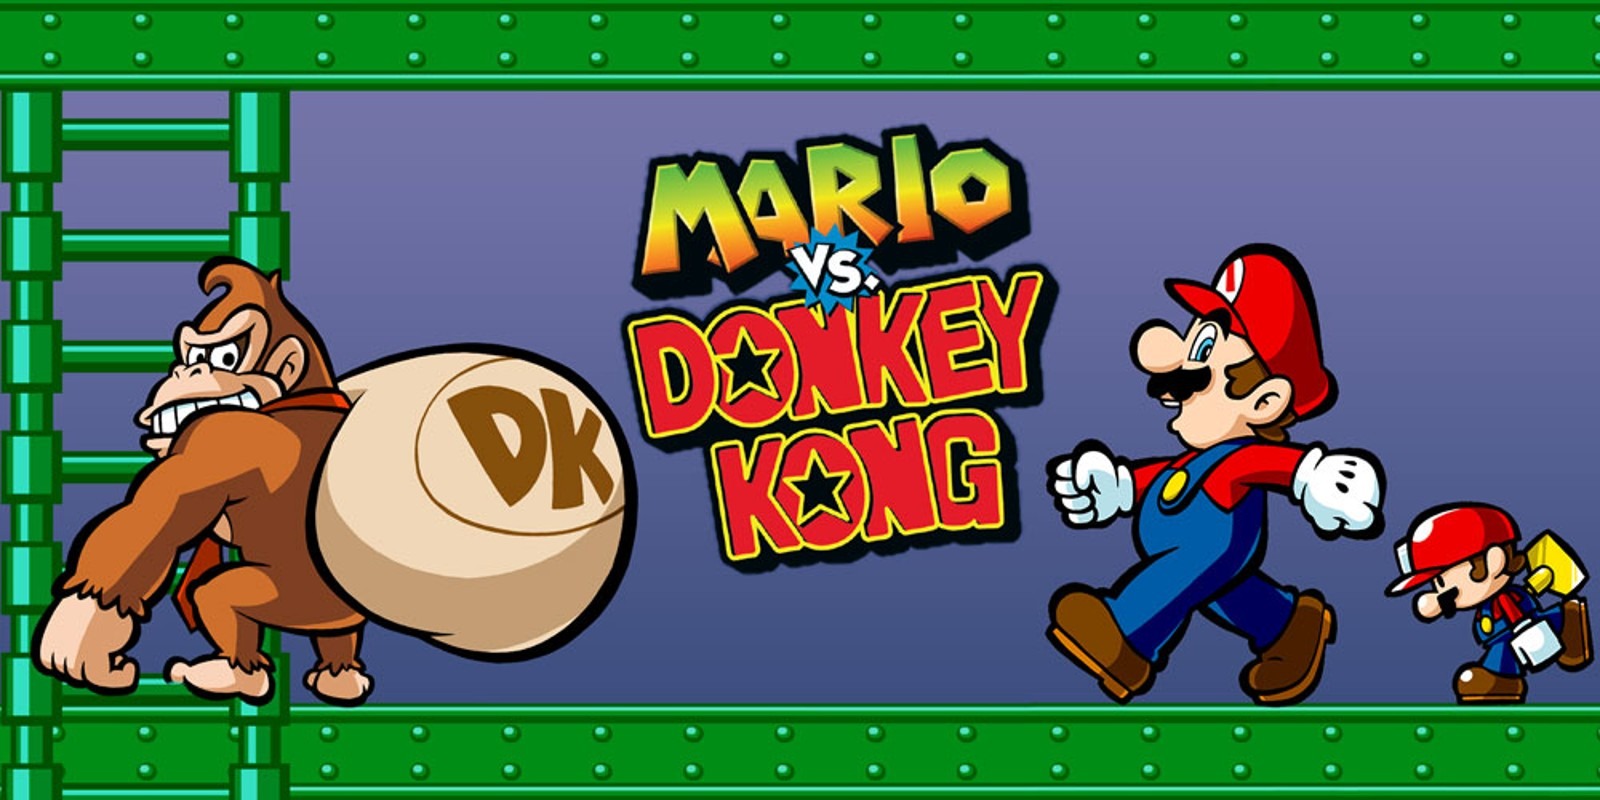 Mario vs. Donkey Kong™ (Standard Edition) - Nintendo Switch